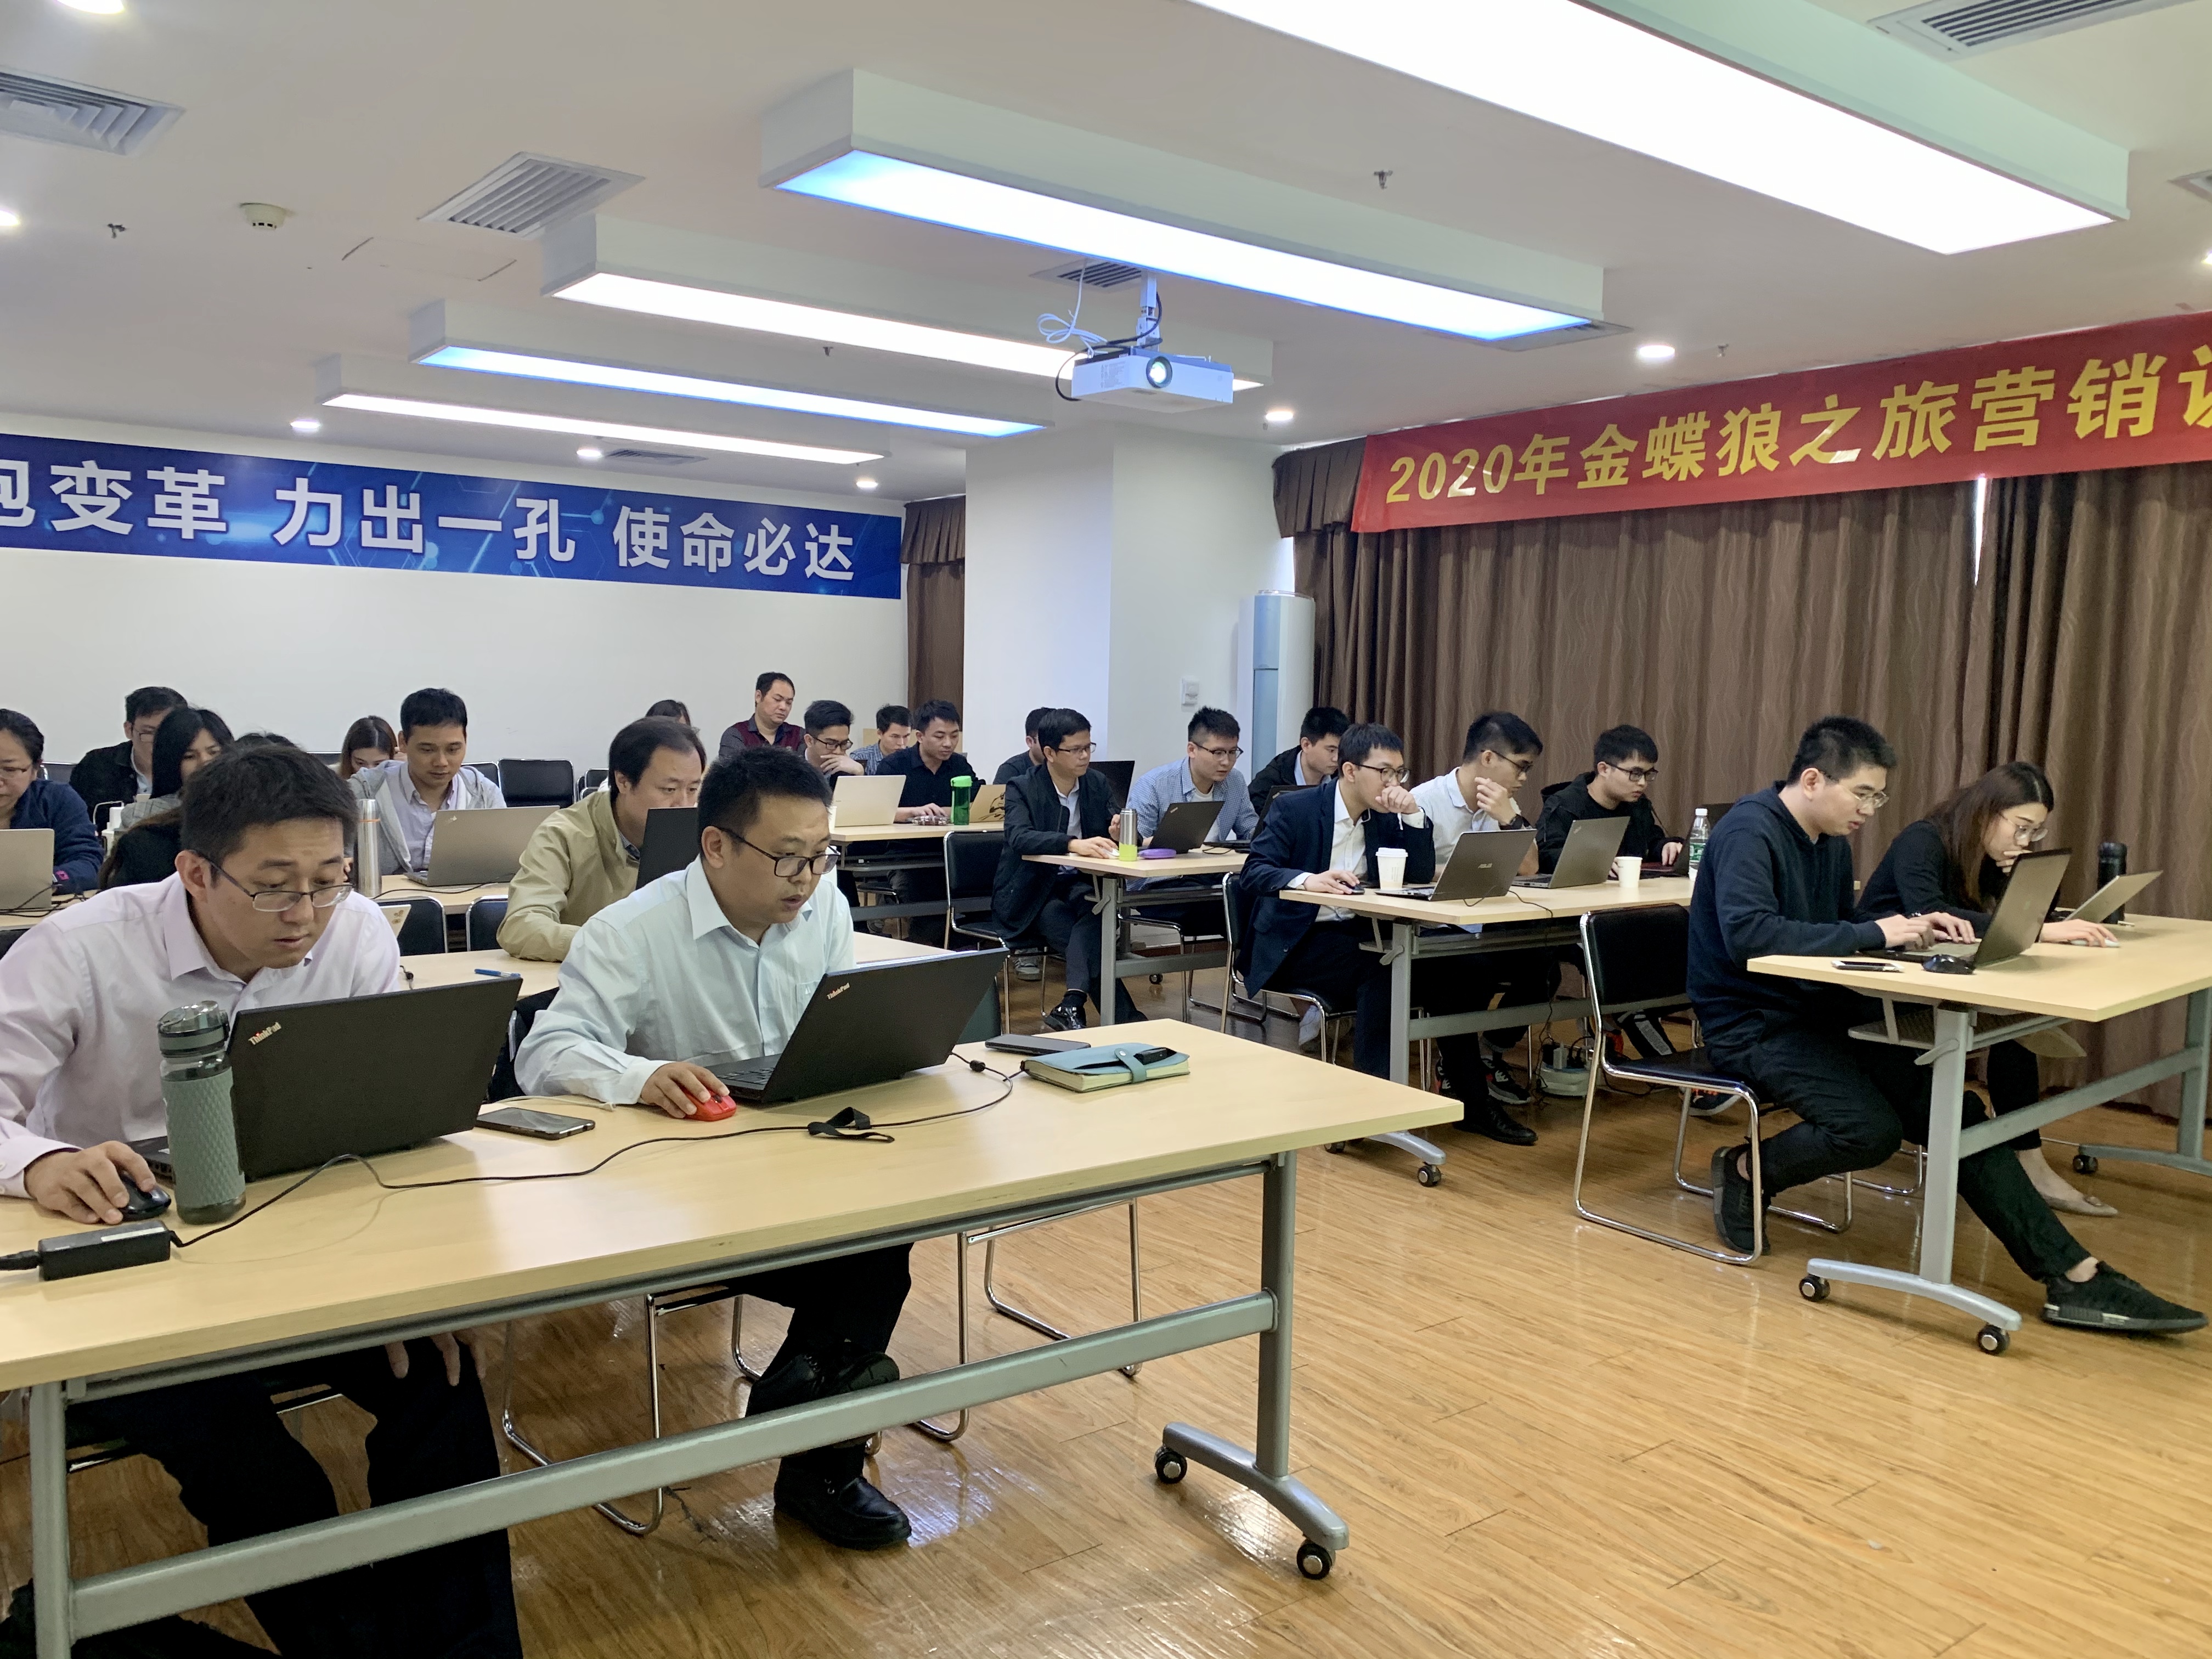 iS-RPA 技术认证培训 广州 20200110 班